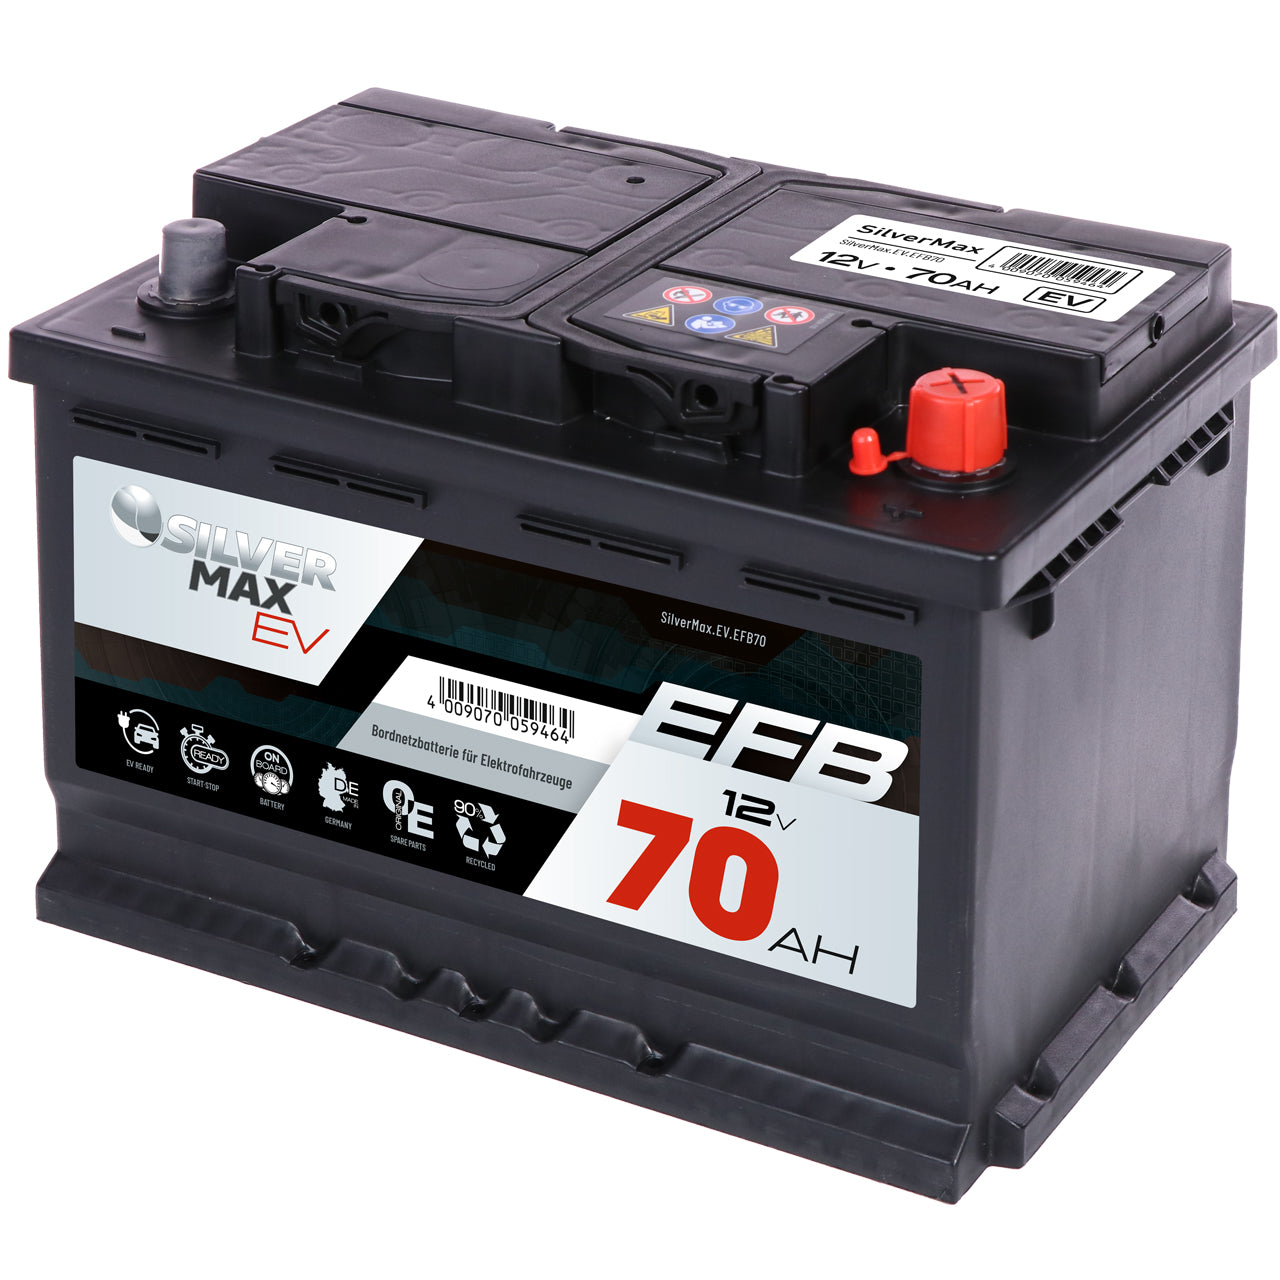 SilverMax EV EFB 12V 70Ah E-Auto Bordnetzbatterie